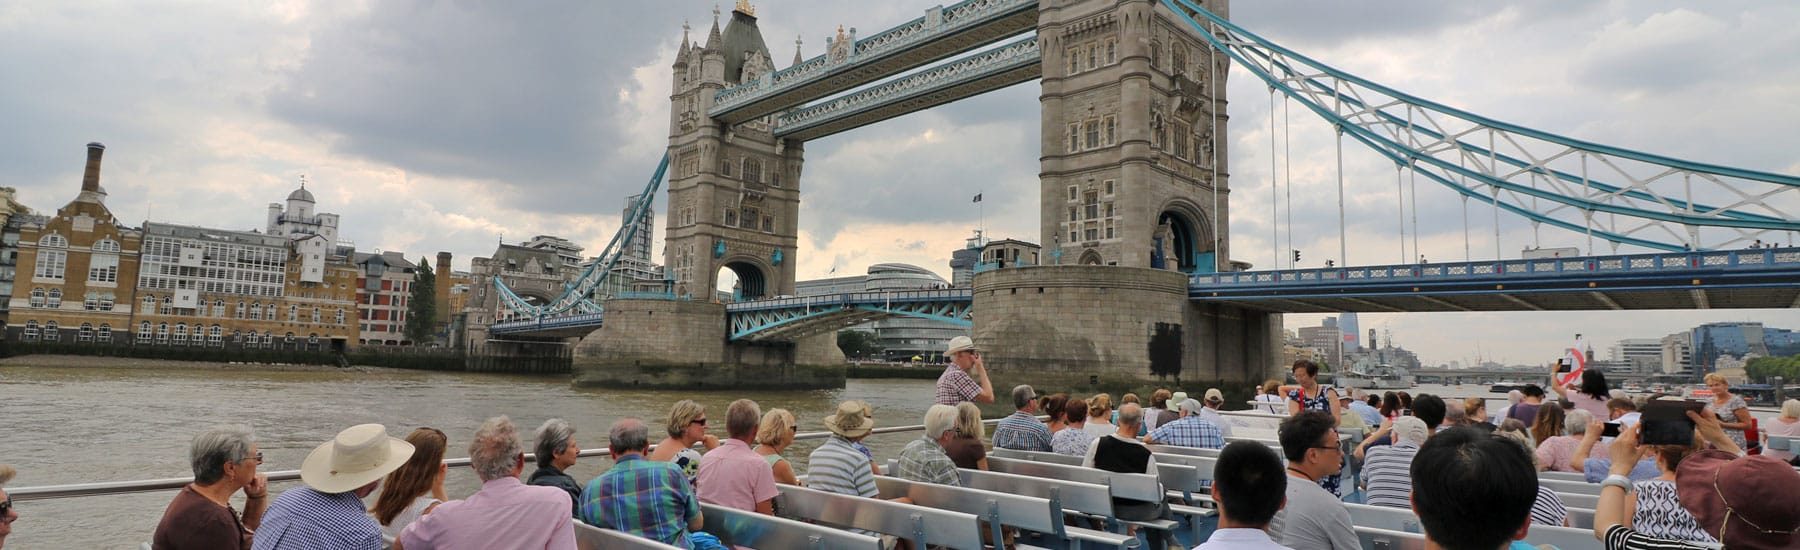 M.V Thomas Doggett pasando Tower Bridge, Londres